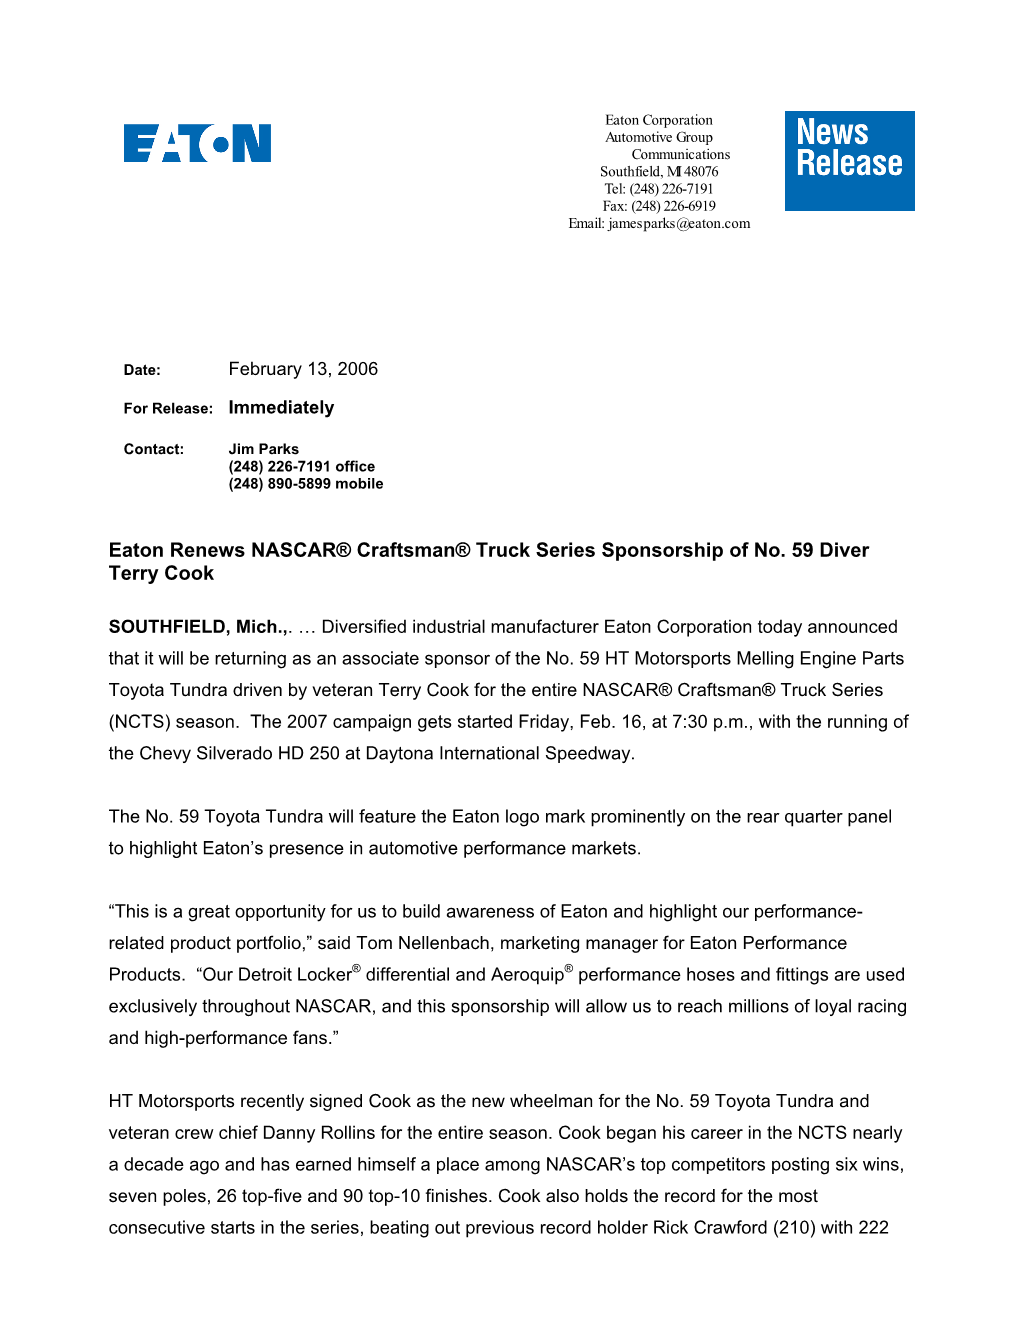 Eaton Renews NASCAR® Craftsman® Truck Series Sponsorship of No. 59 Diver Terry Cook